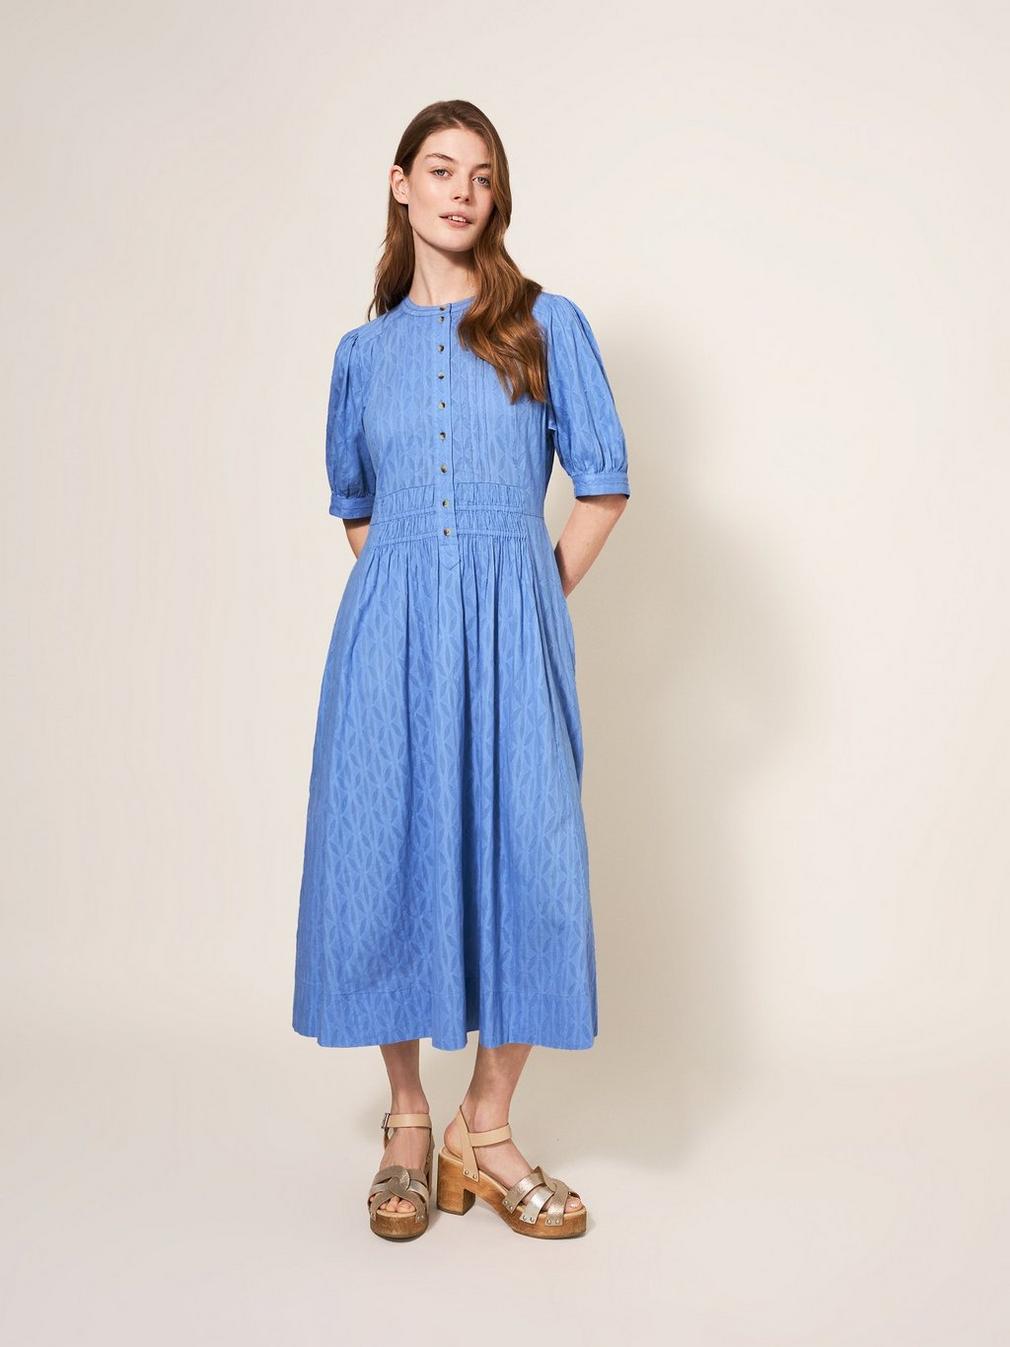 Celeste Cotton Dress in MID BLUE - MODEL FRONT